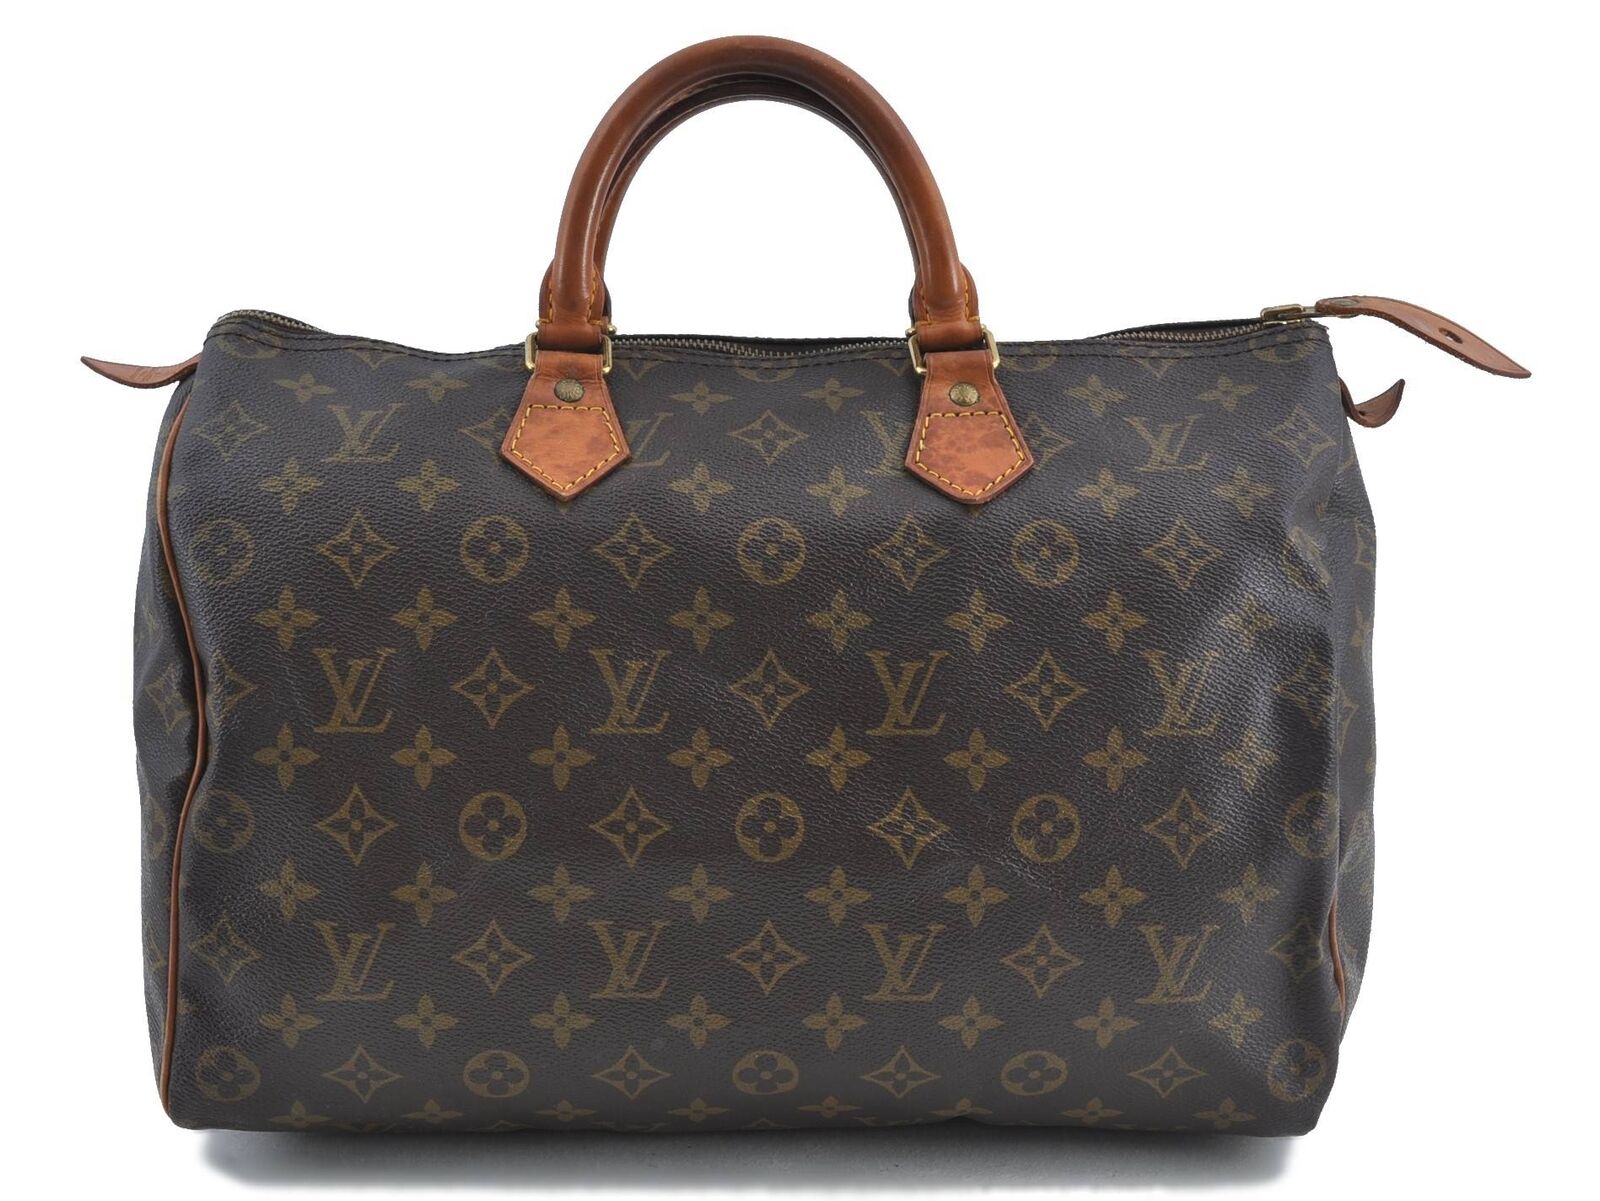 Authentic Louis Vuitton Monogram Speedy 35 Hand Bag M41524 LV H6400